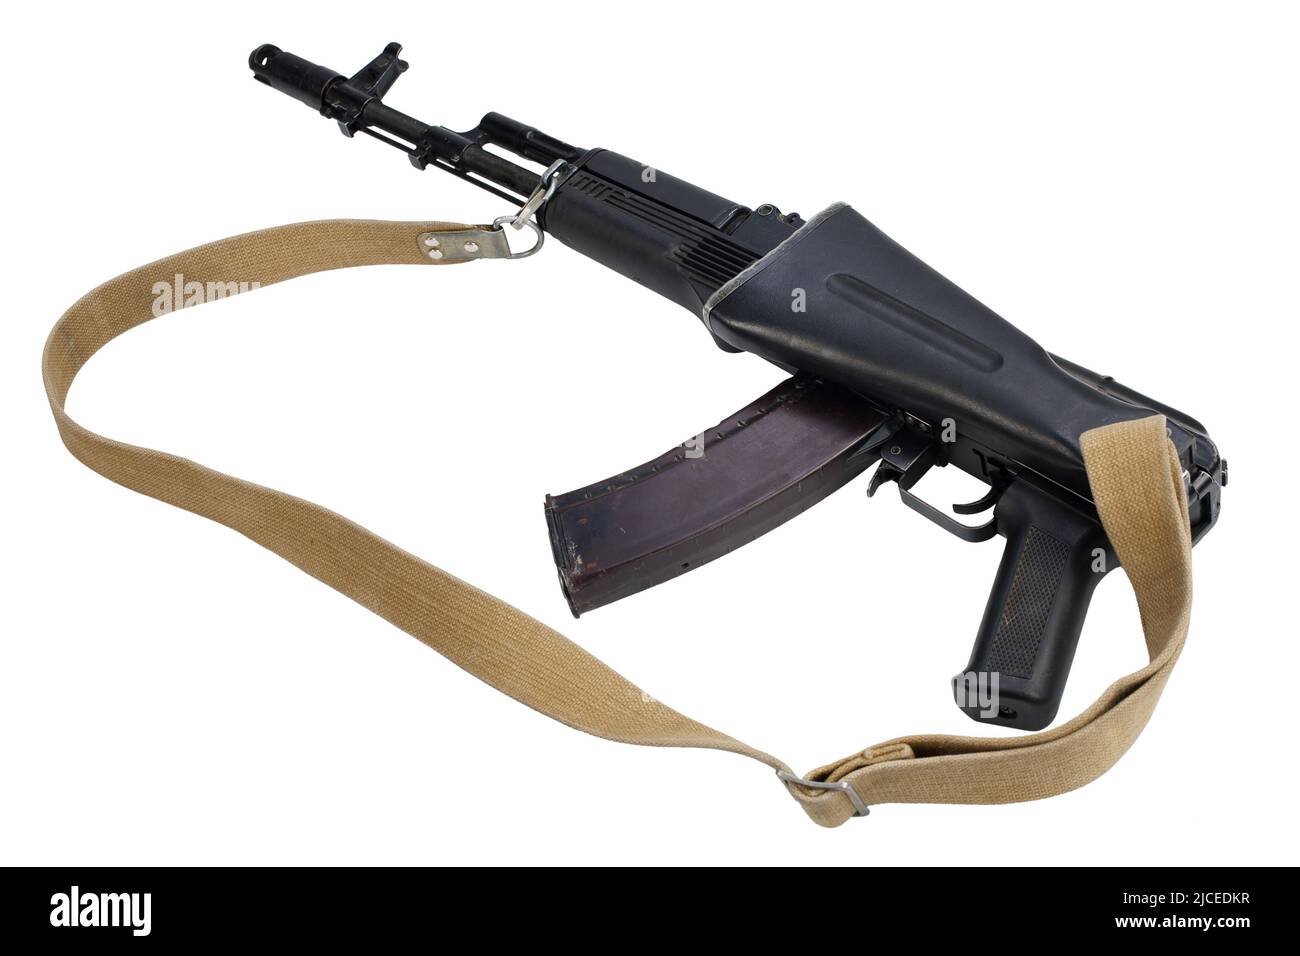 modern kalashnikov AK 74M assault rifle with folded stock isolated on white background Stock Photo